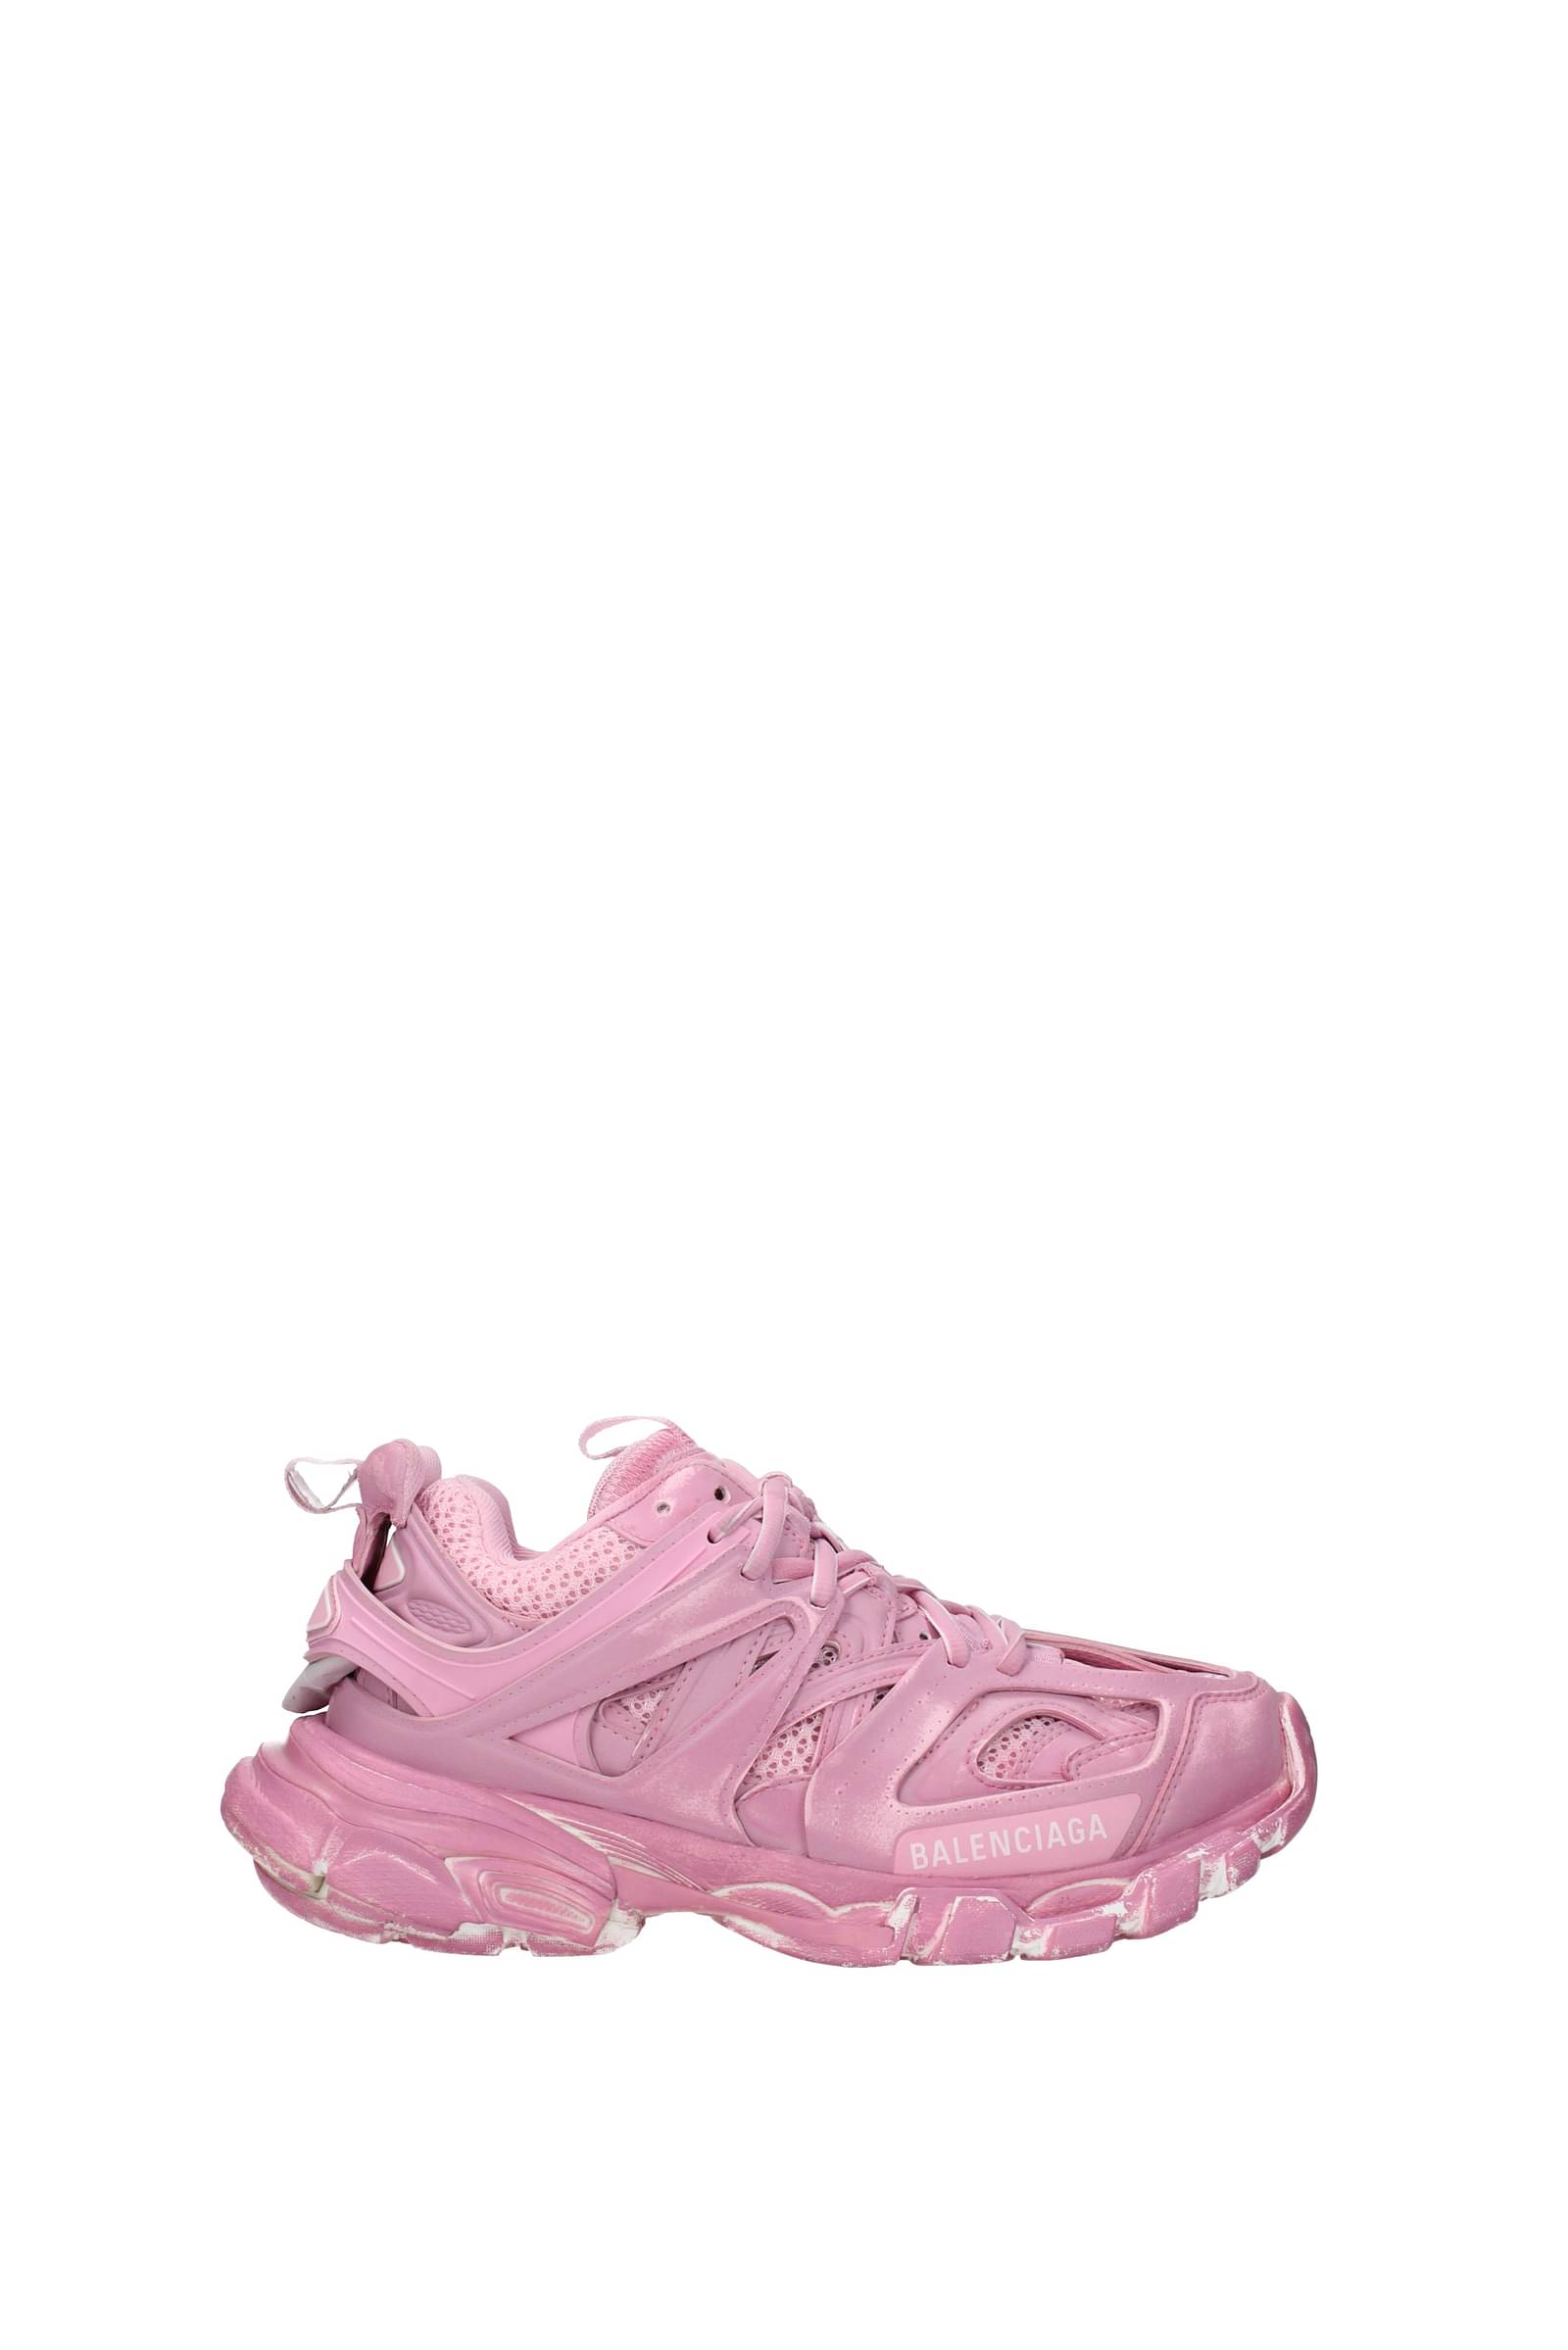 pink and white balenciaga sneakers